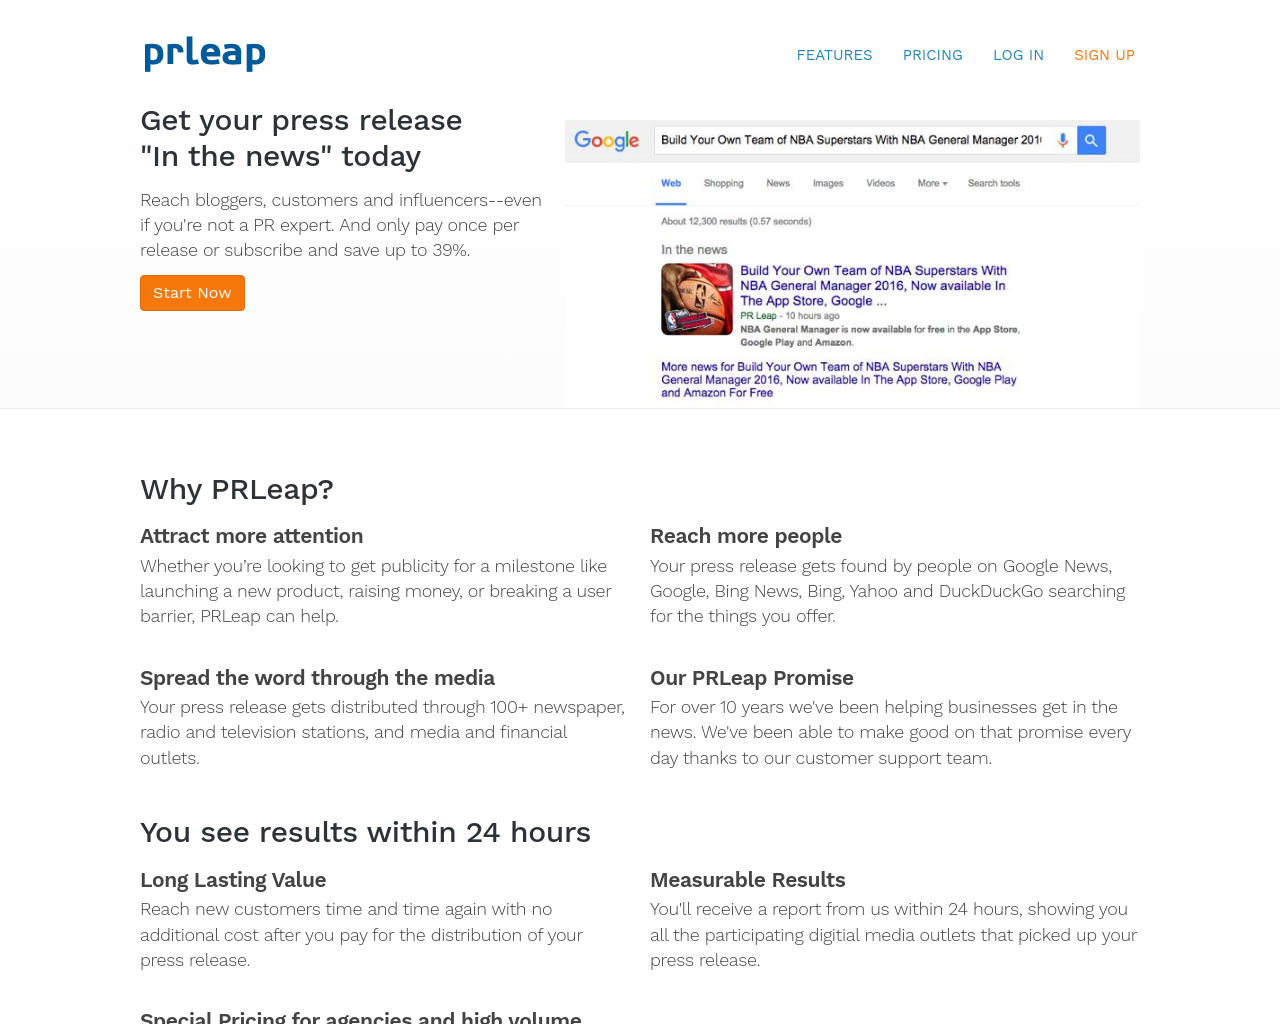 prleap.com